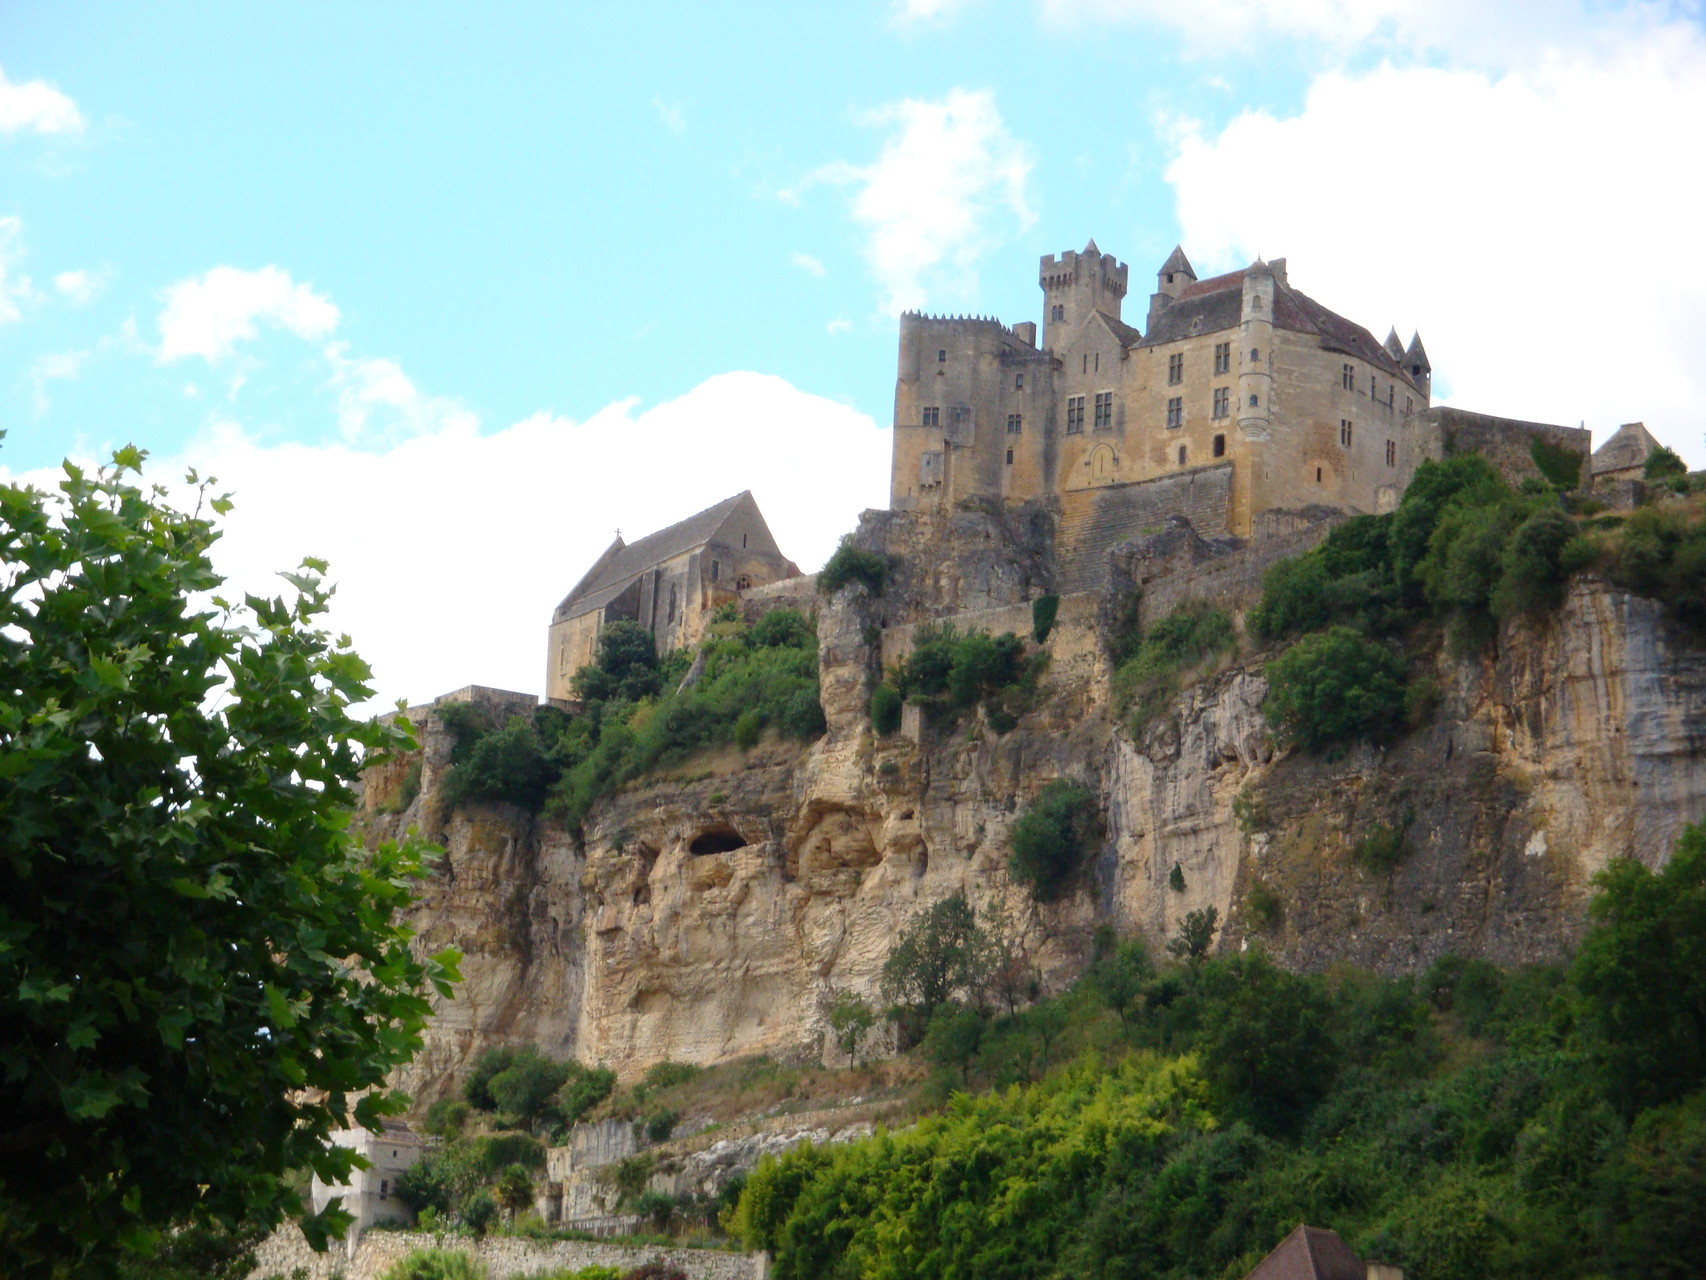 Château de Beynac et Cazenac